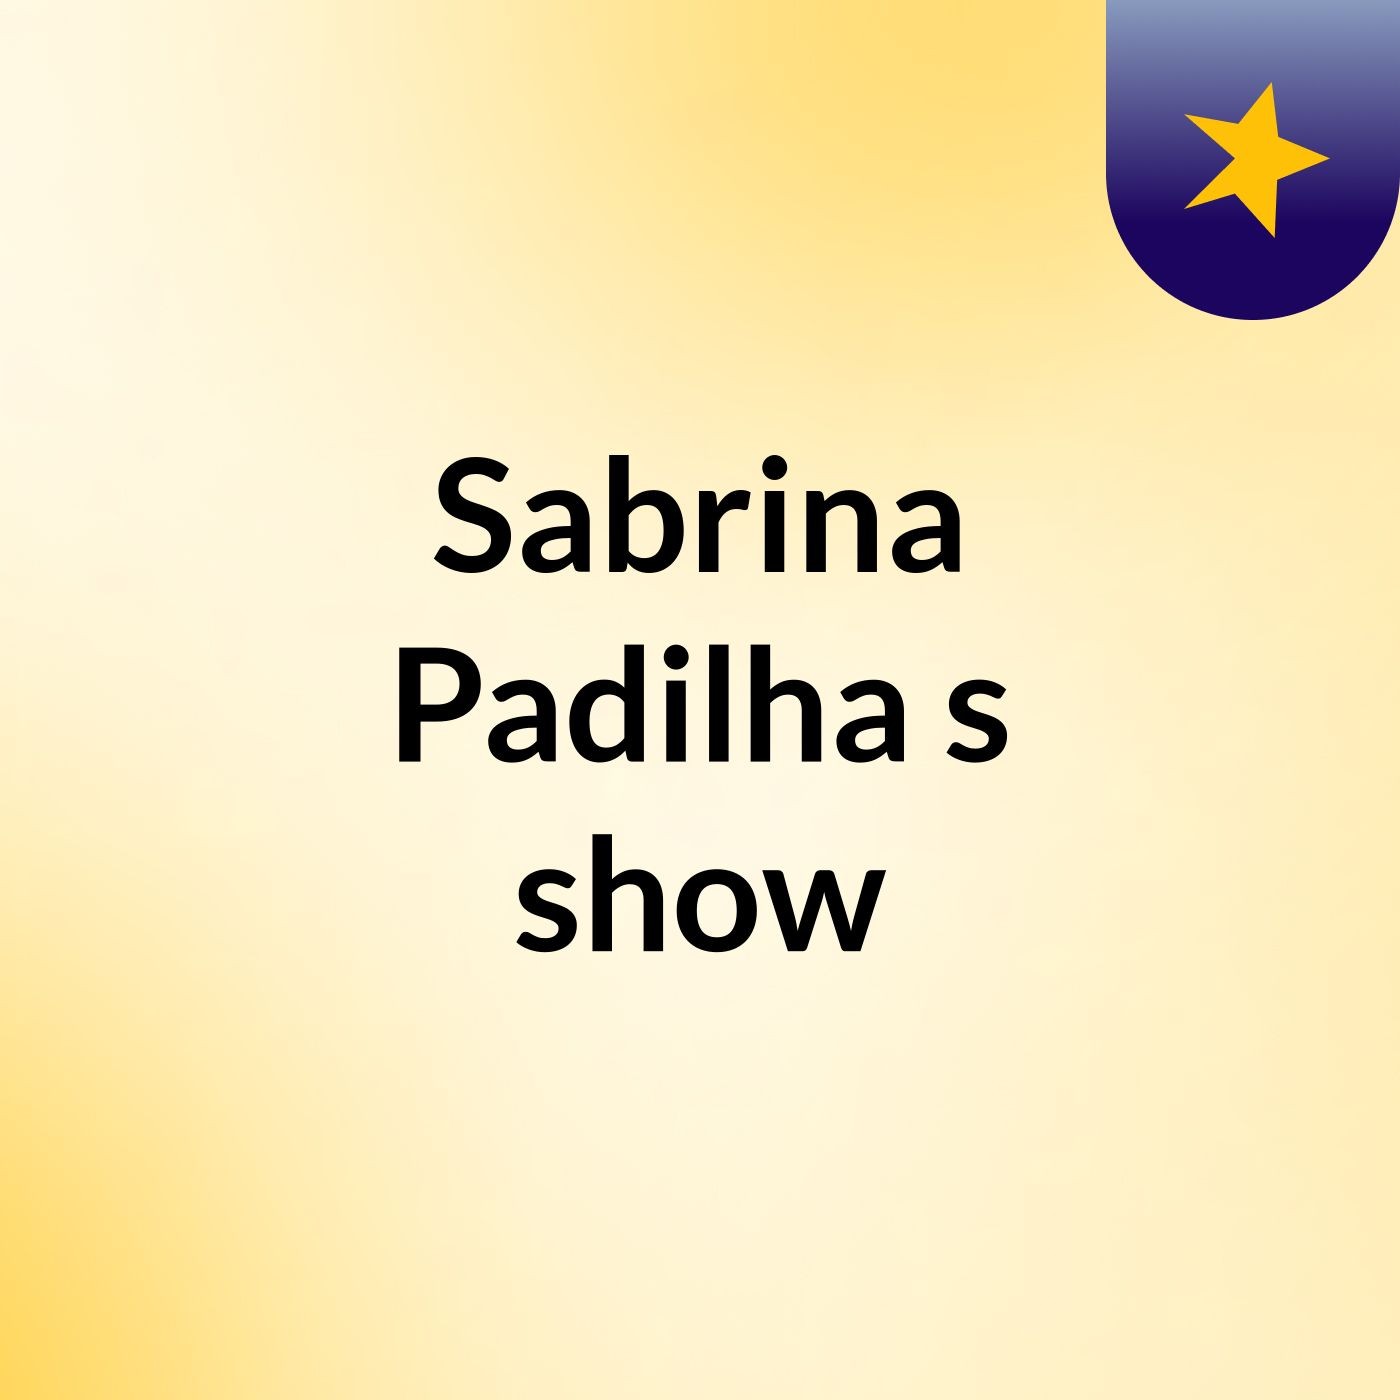 Sabrina Padilha's show